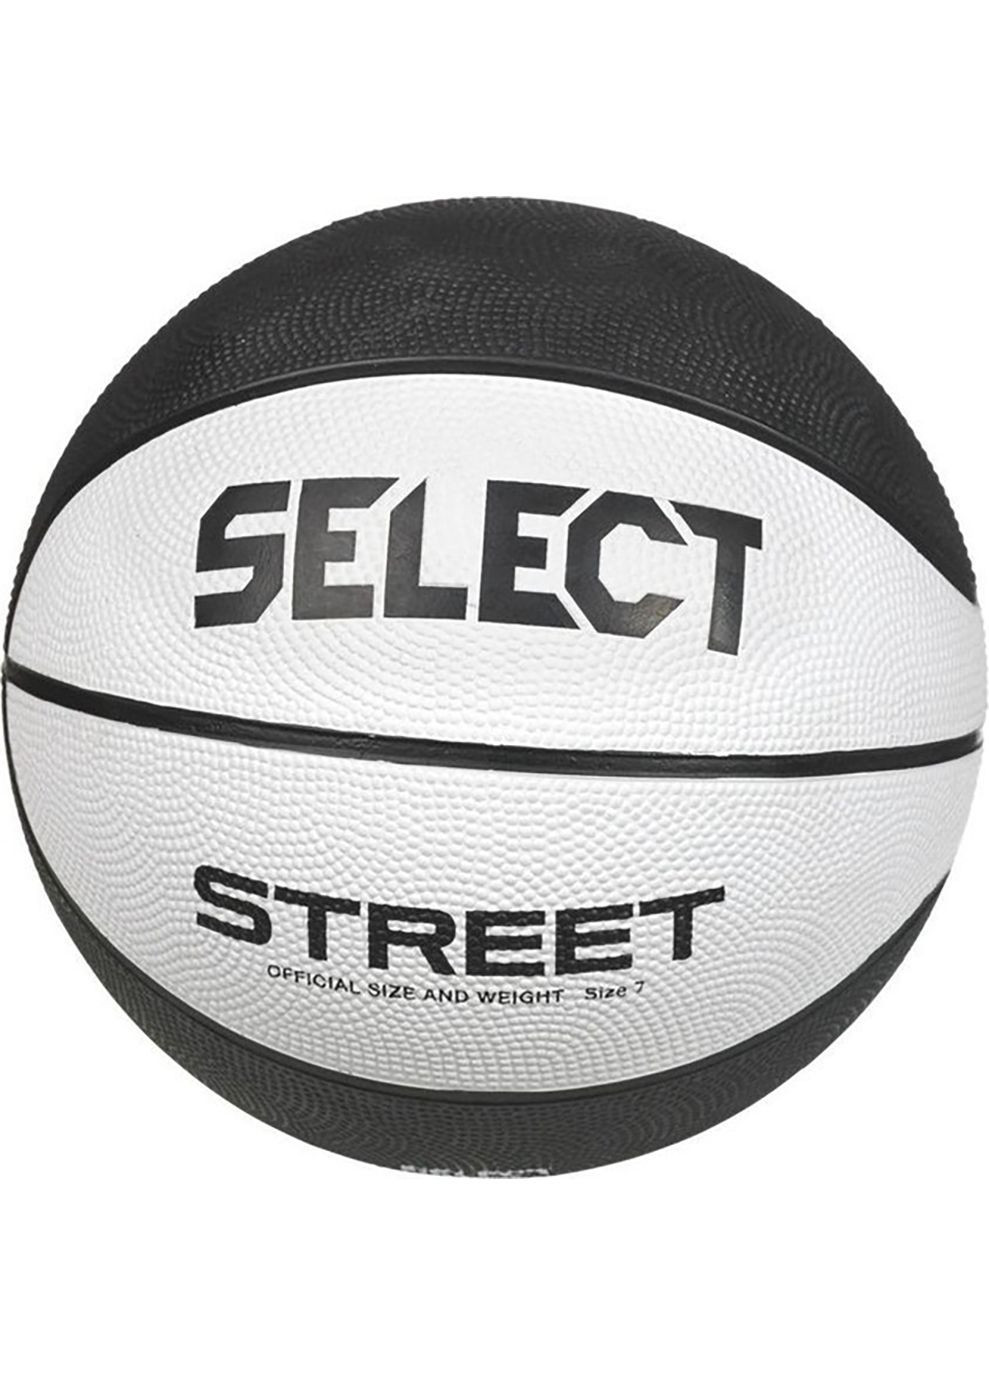 Баскетбольный Мяч BASKETBALL STREET v23 бело-черный Уни 7 Select (282615723)